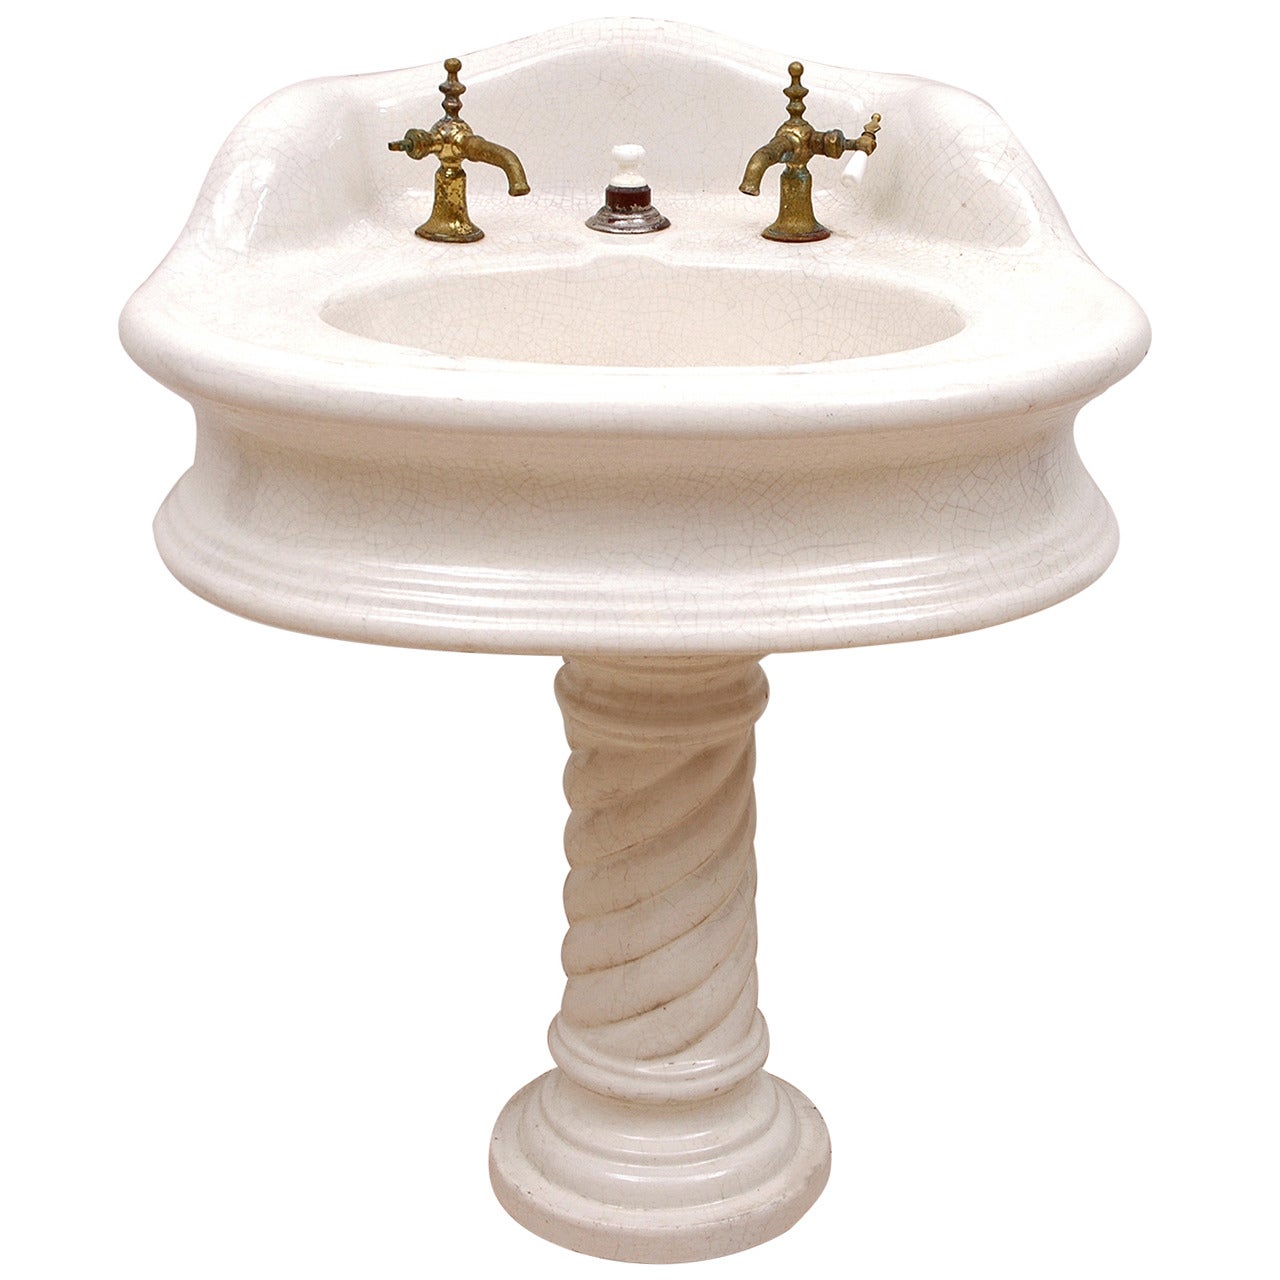 POST FREE. Victorian character rich colors porcelain wash basin Heavy floral swirl design Matt glaze bathroom sink